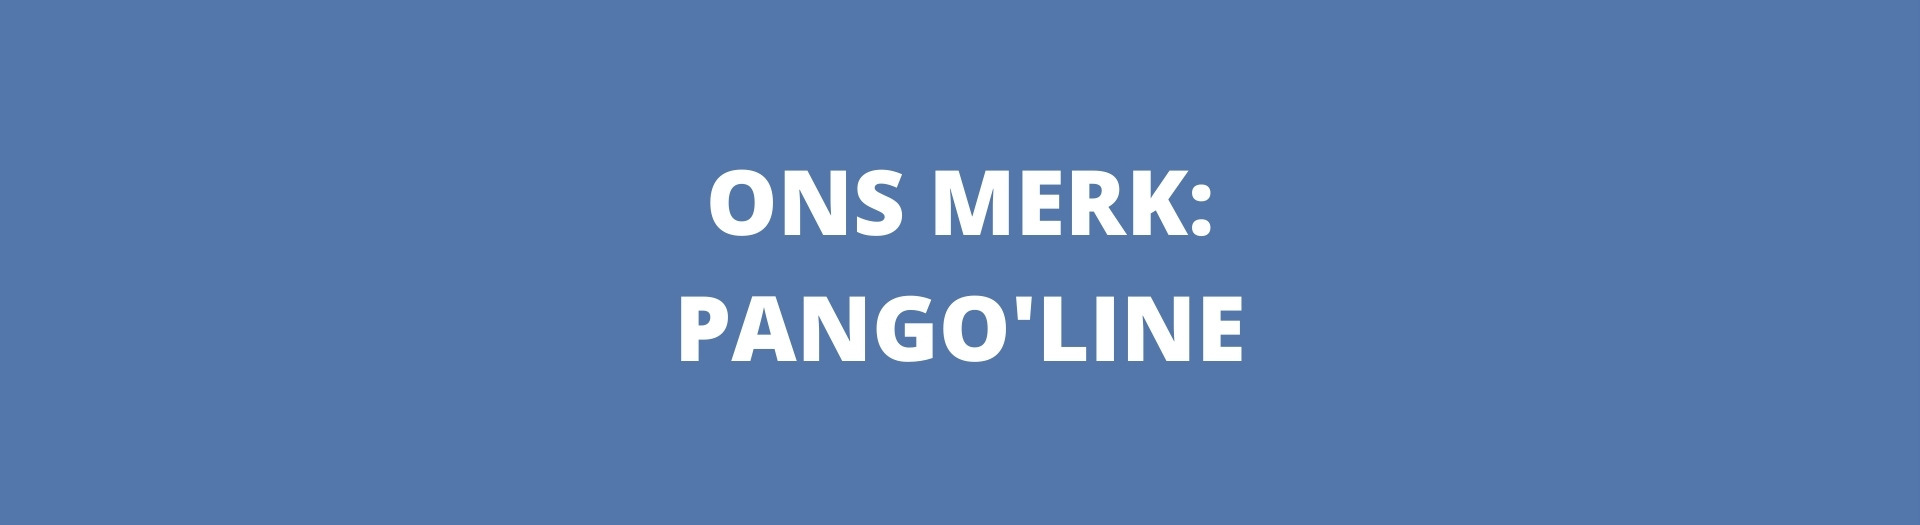 Our brand: Pango'Line